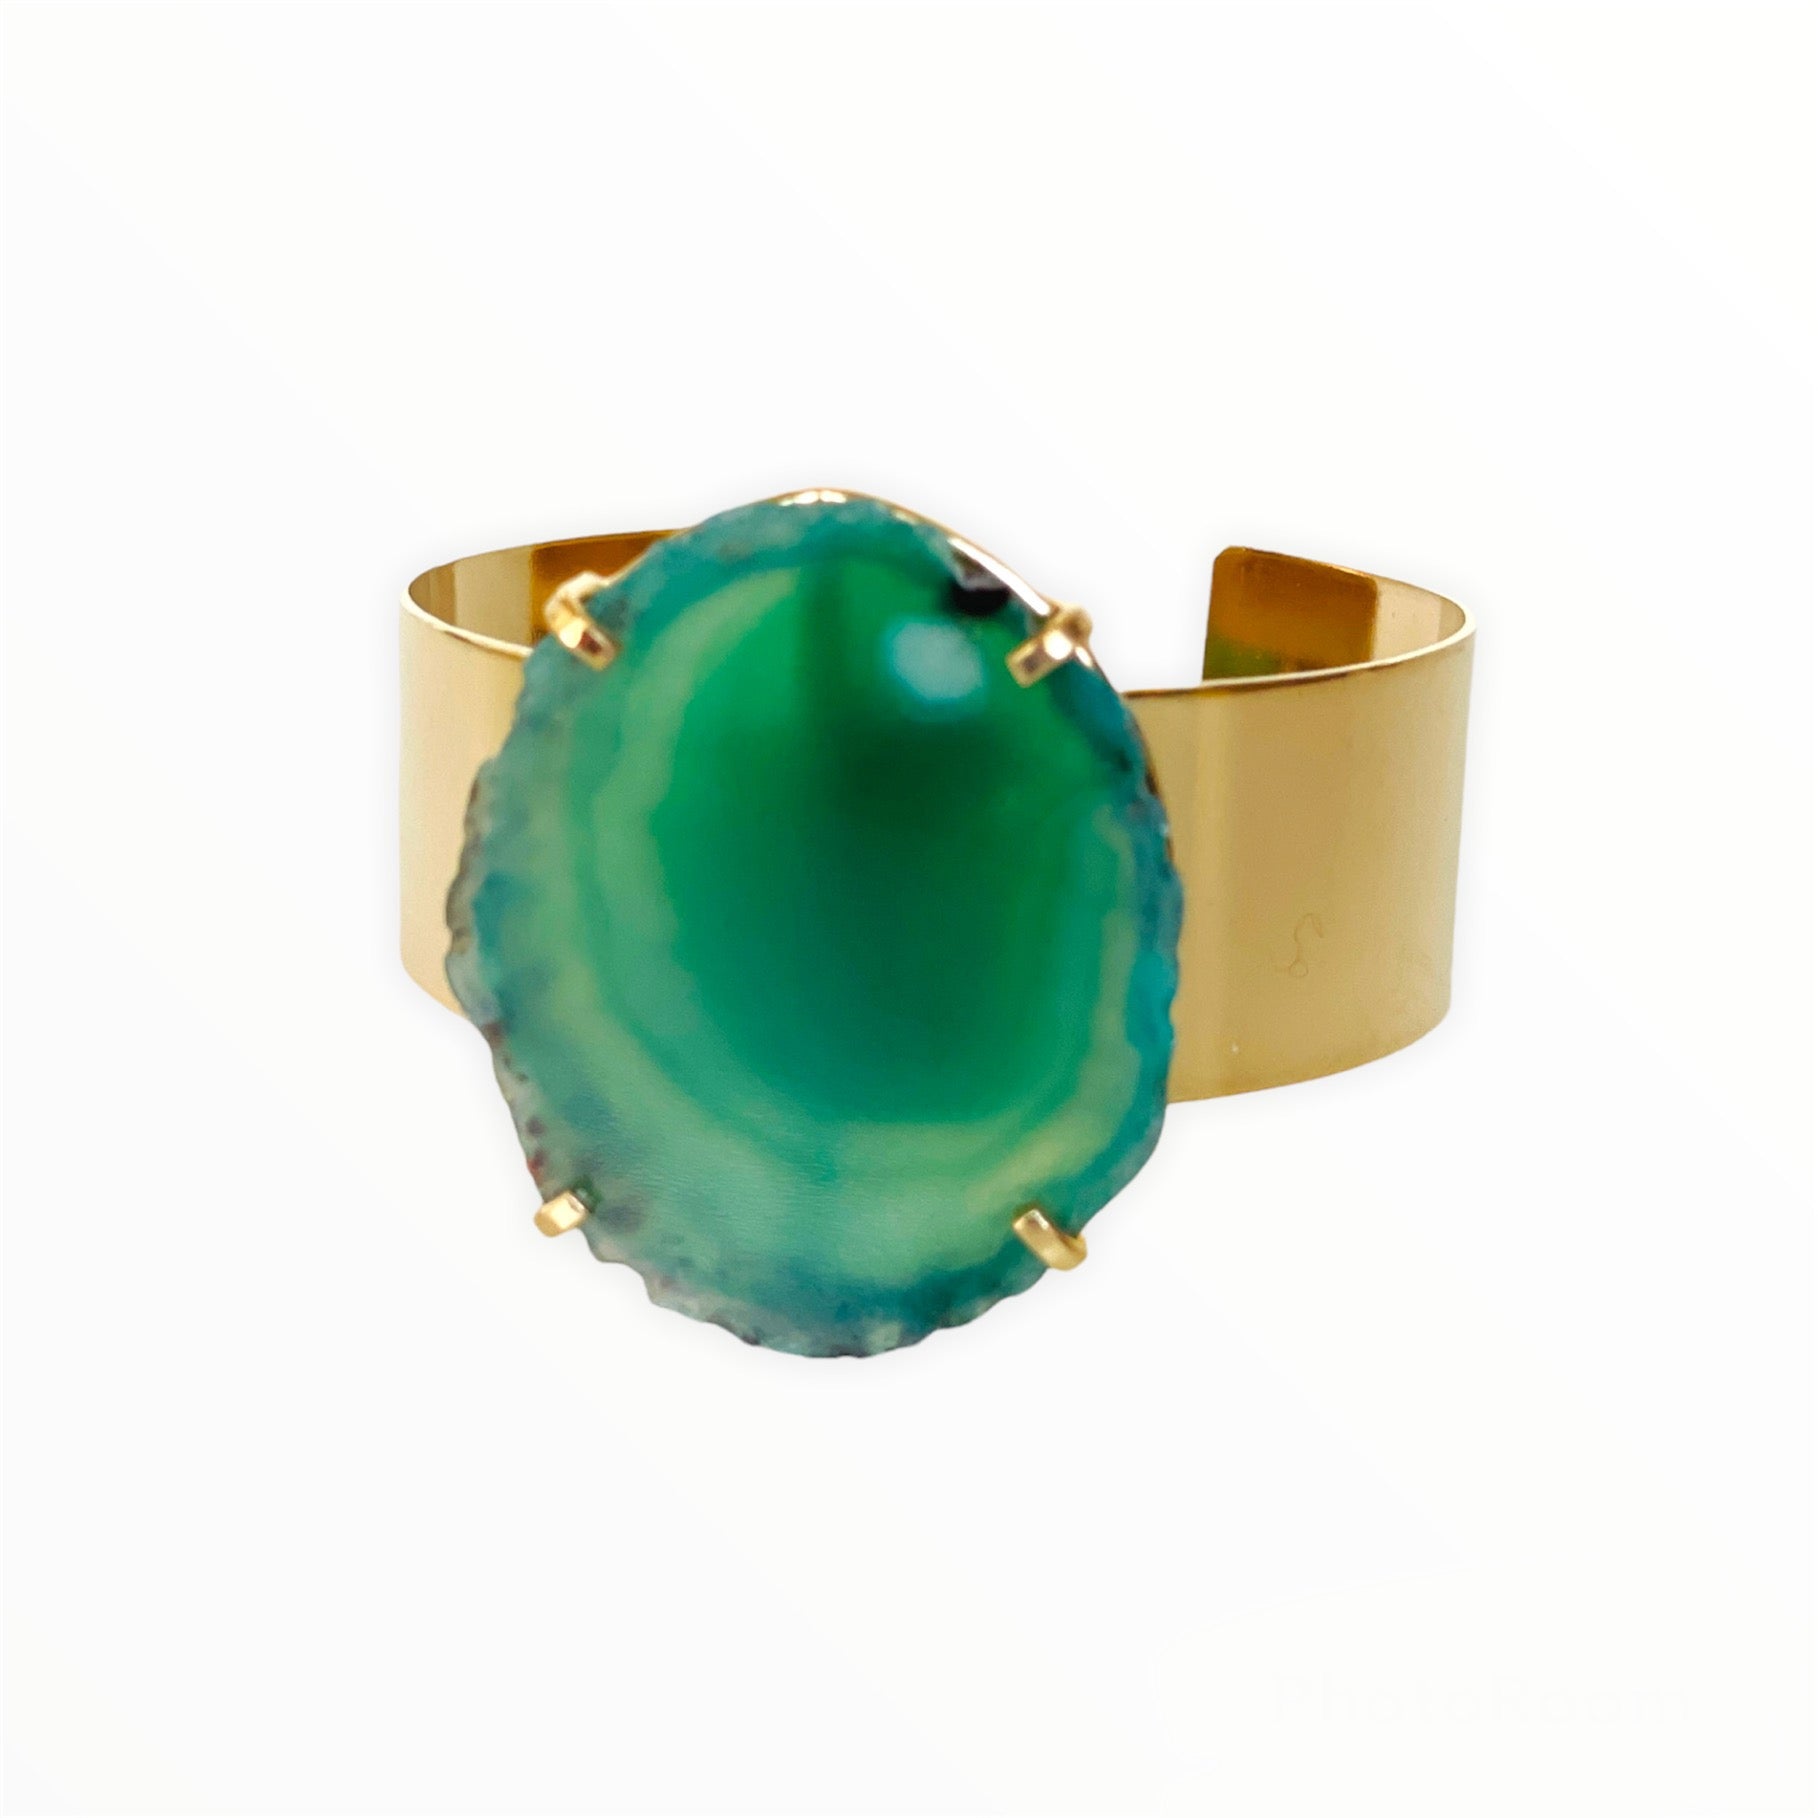 Bracelet Golden Cuff Green Agate